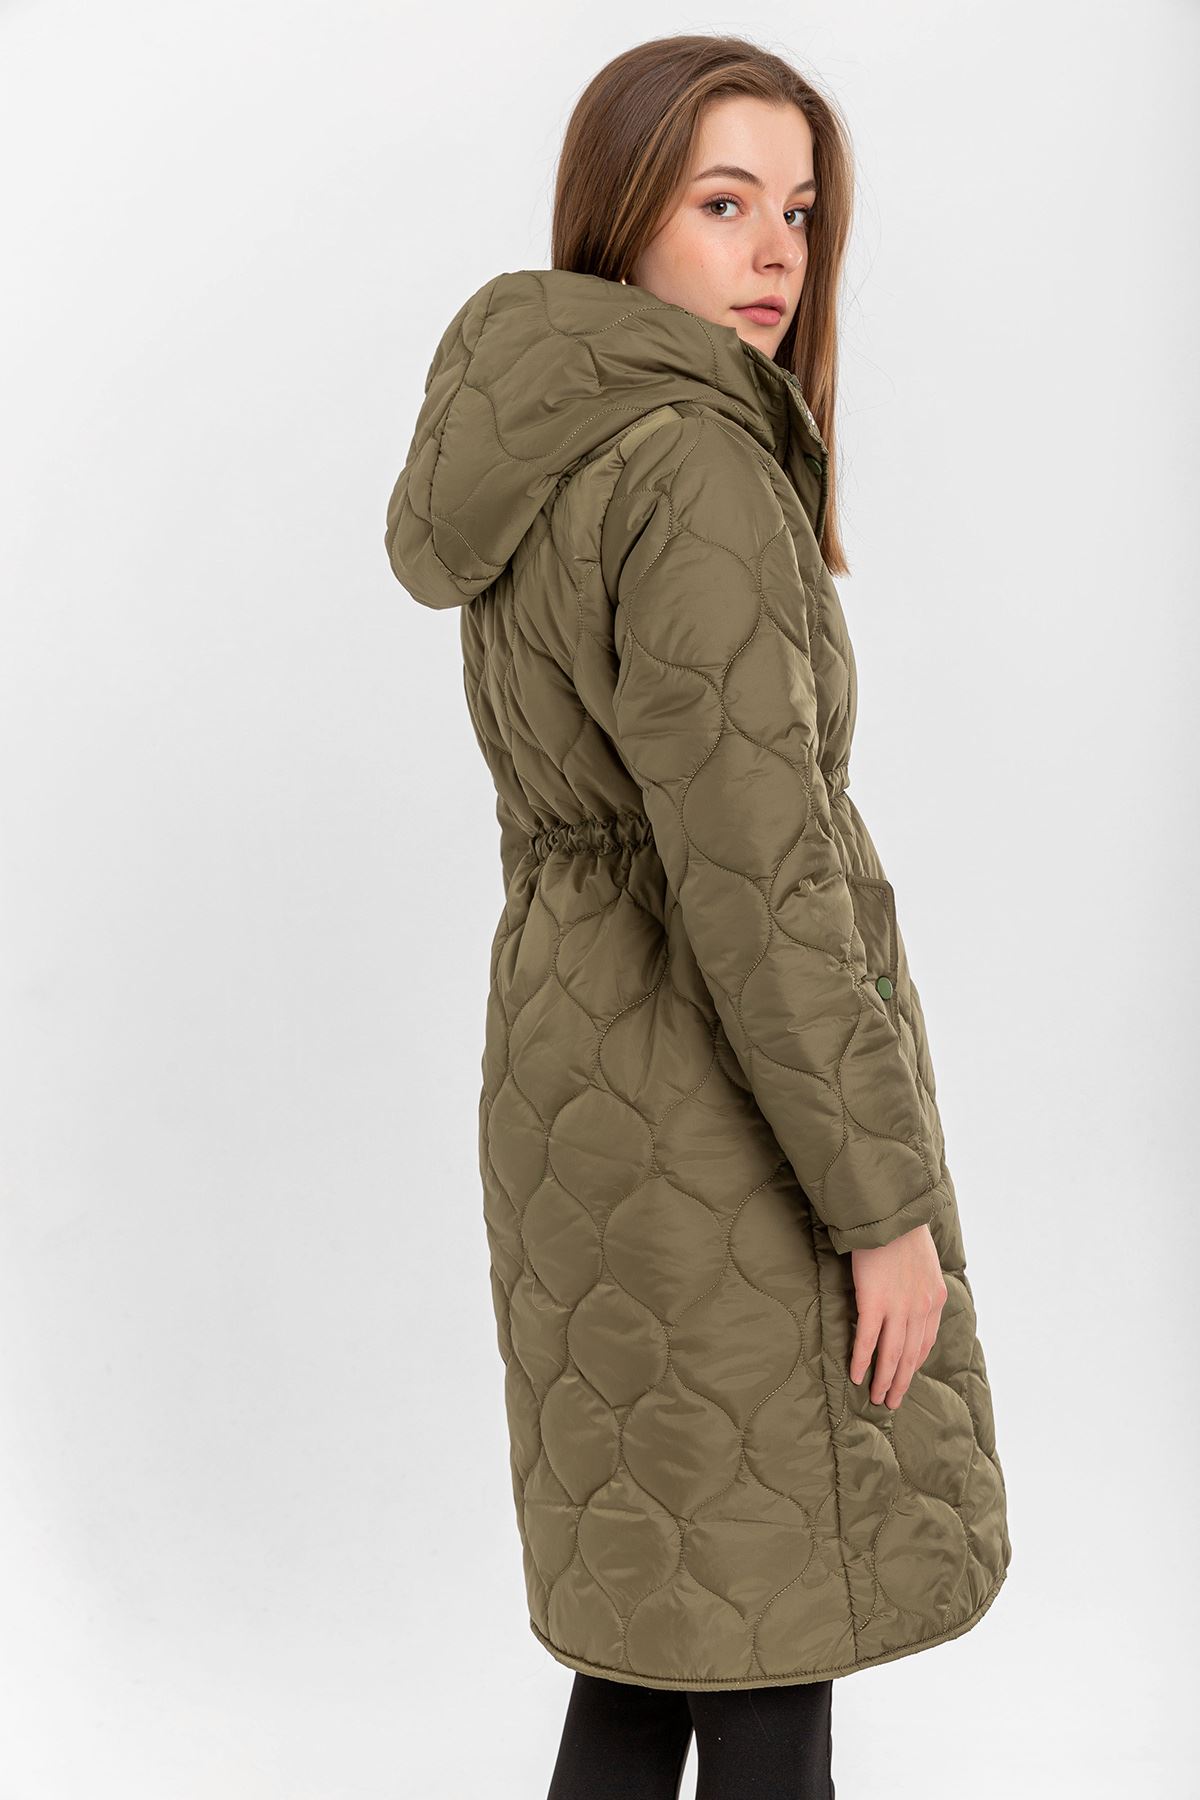 Quilted Fabric Long Sleeve Zip Neck Midi Women Coat - Khaki 